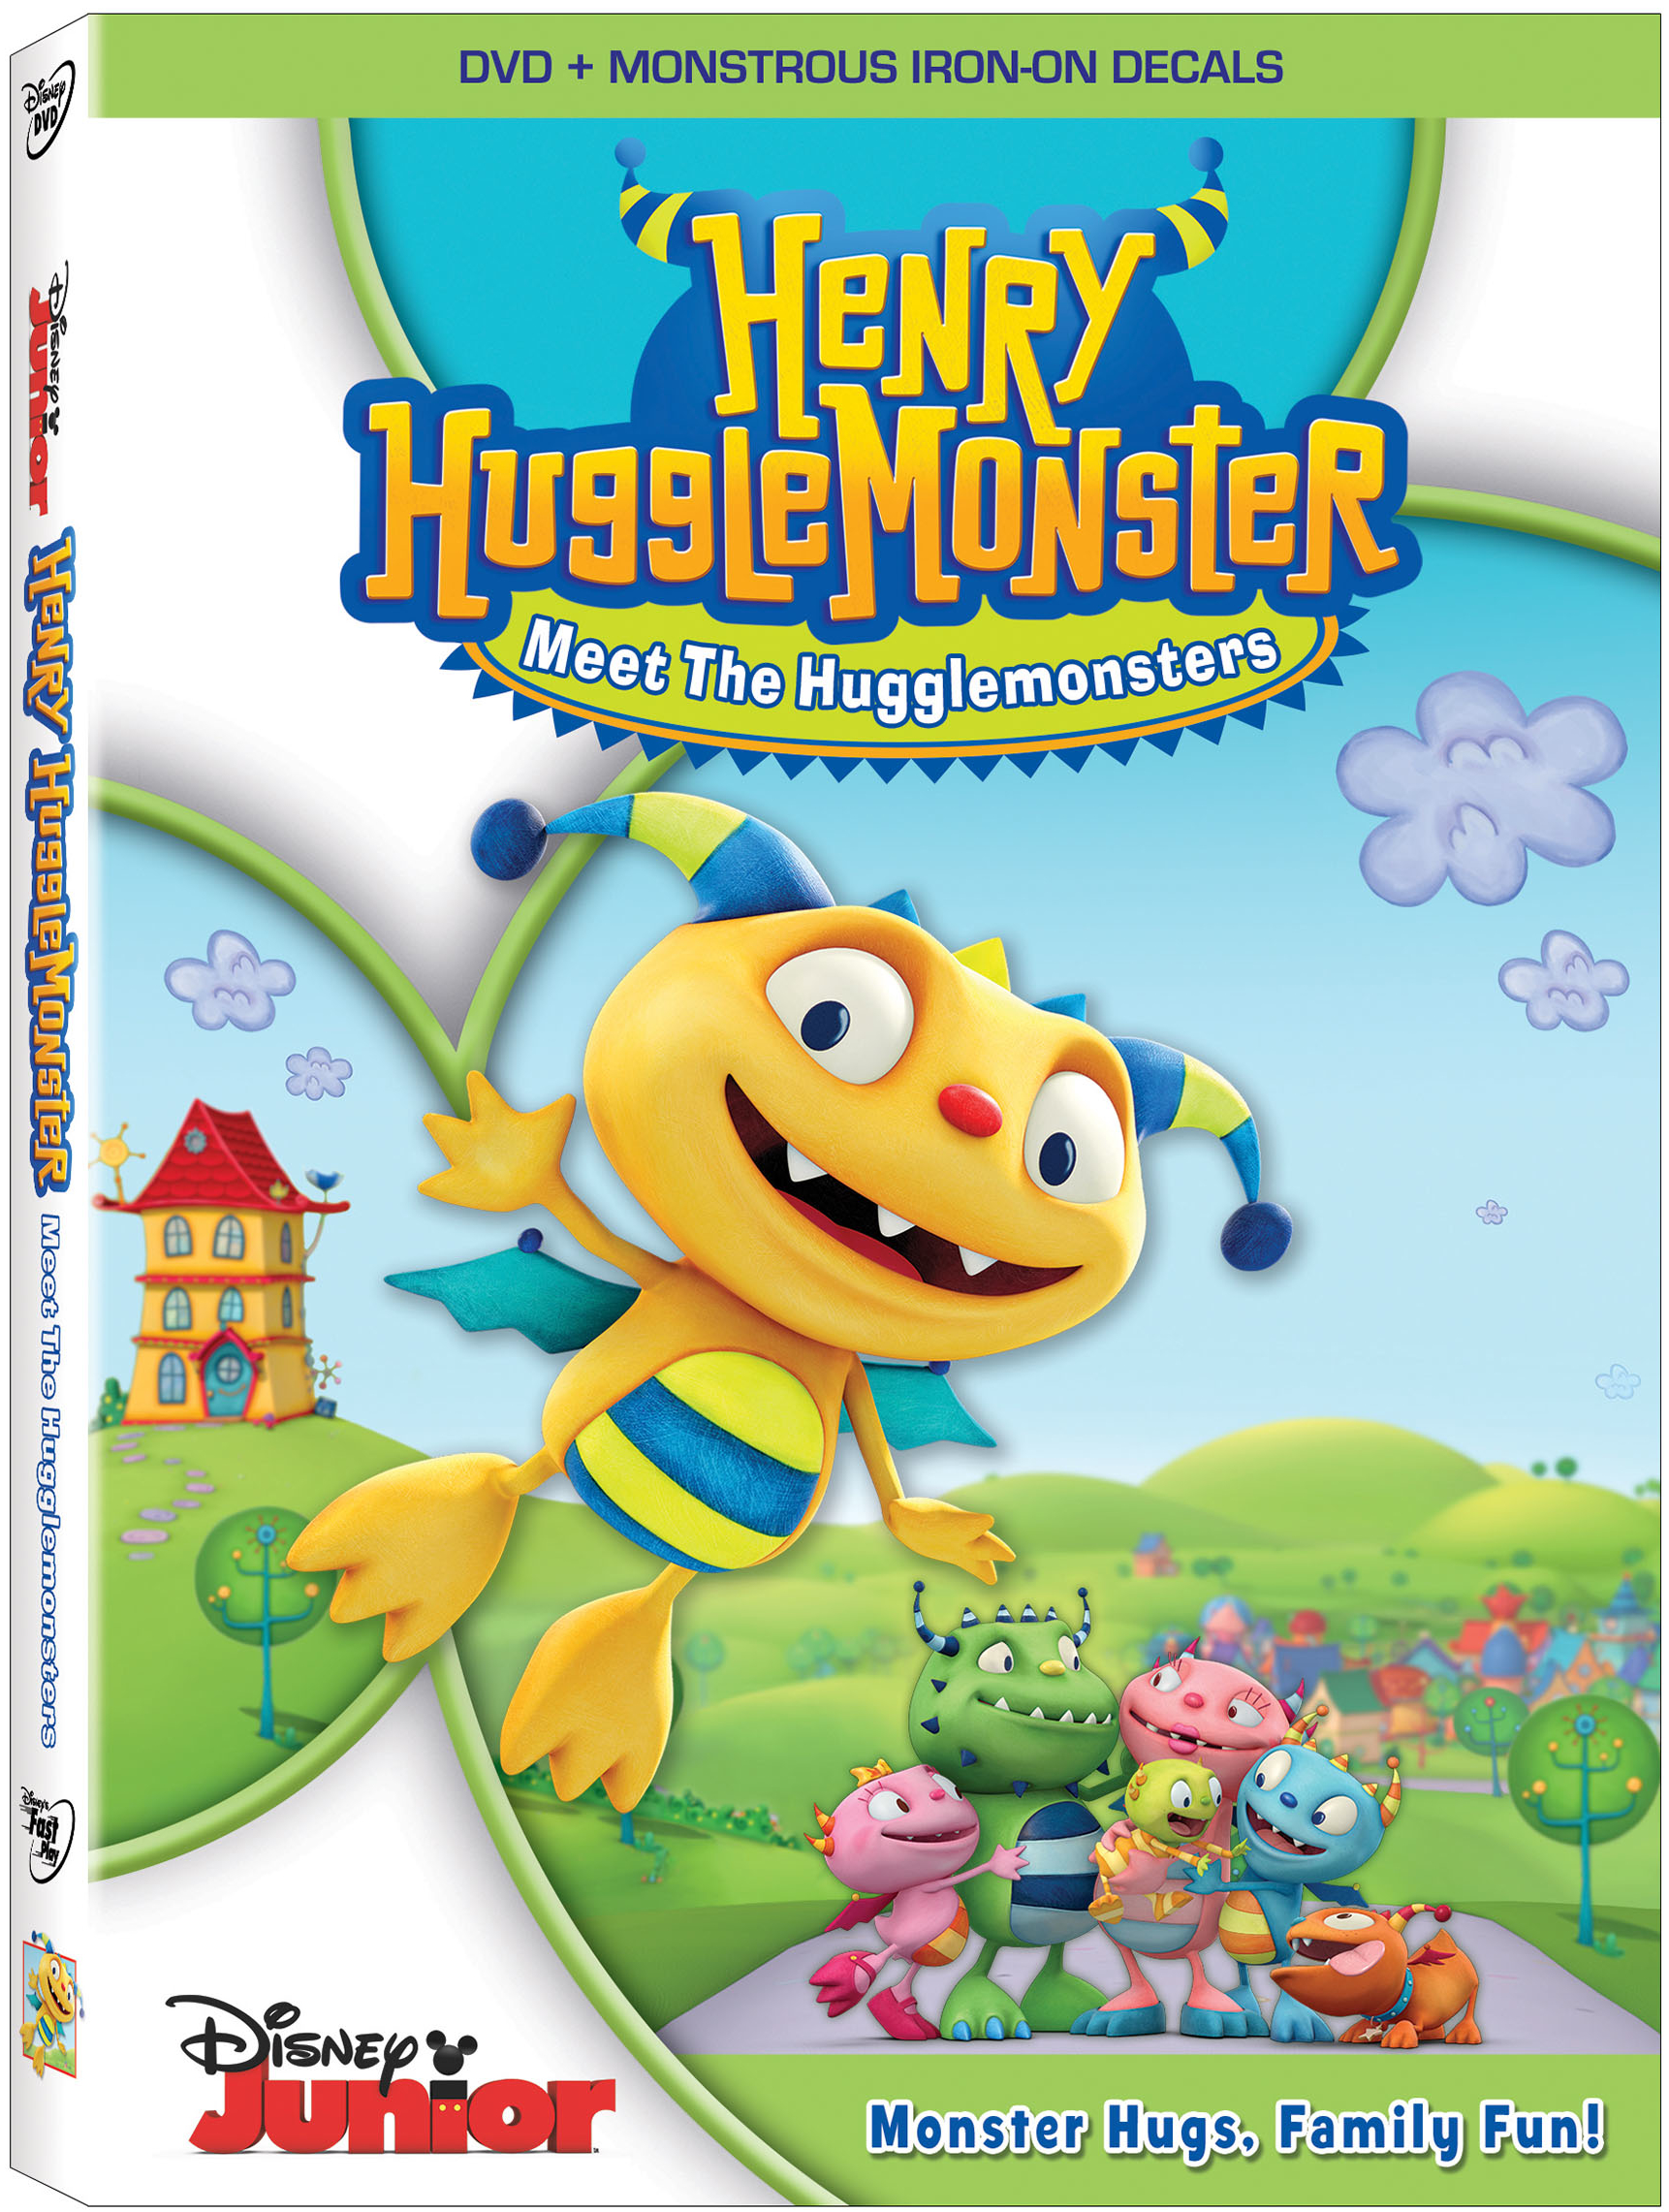 henry hugglemonster coloring pages